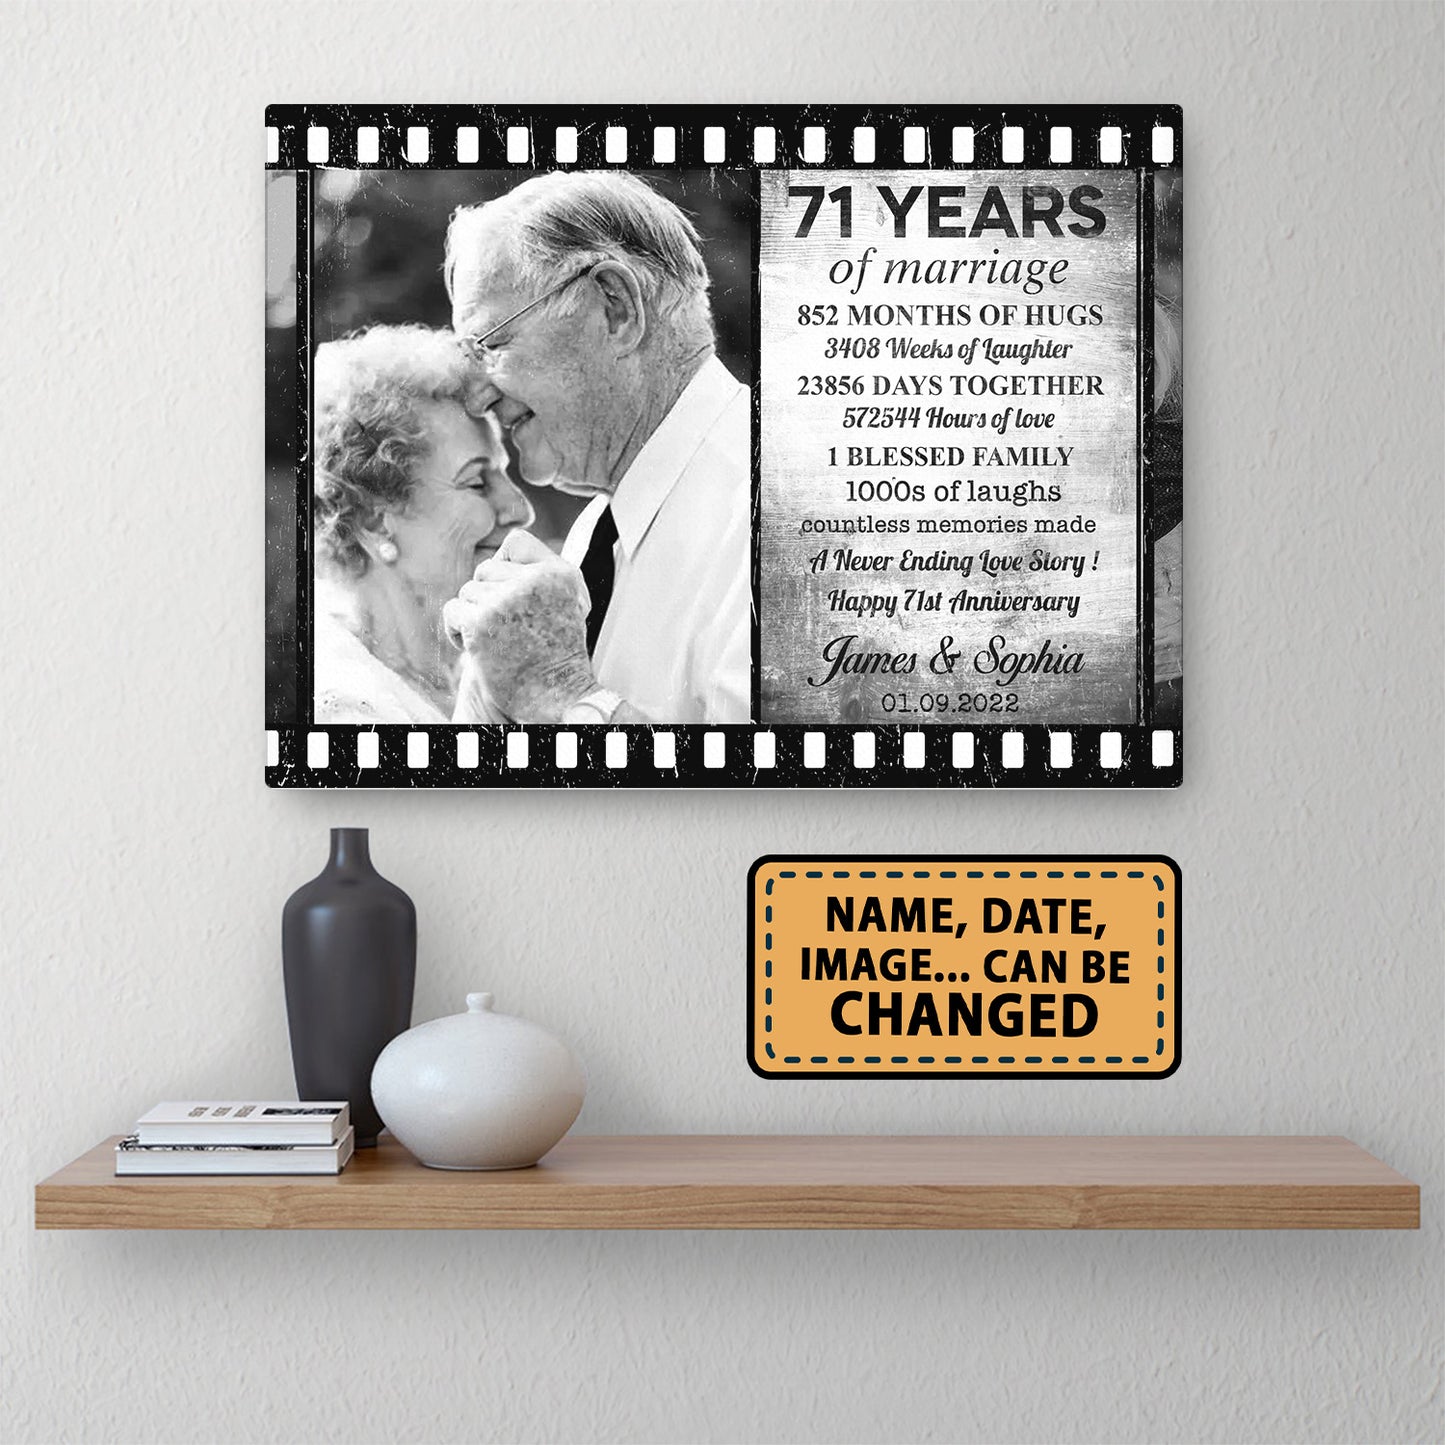 71 Years Of Marriage Film Custom Image Anniversary Canvas